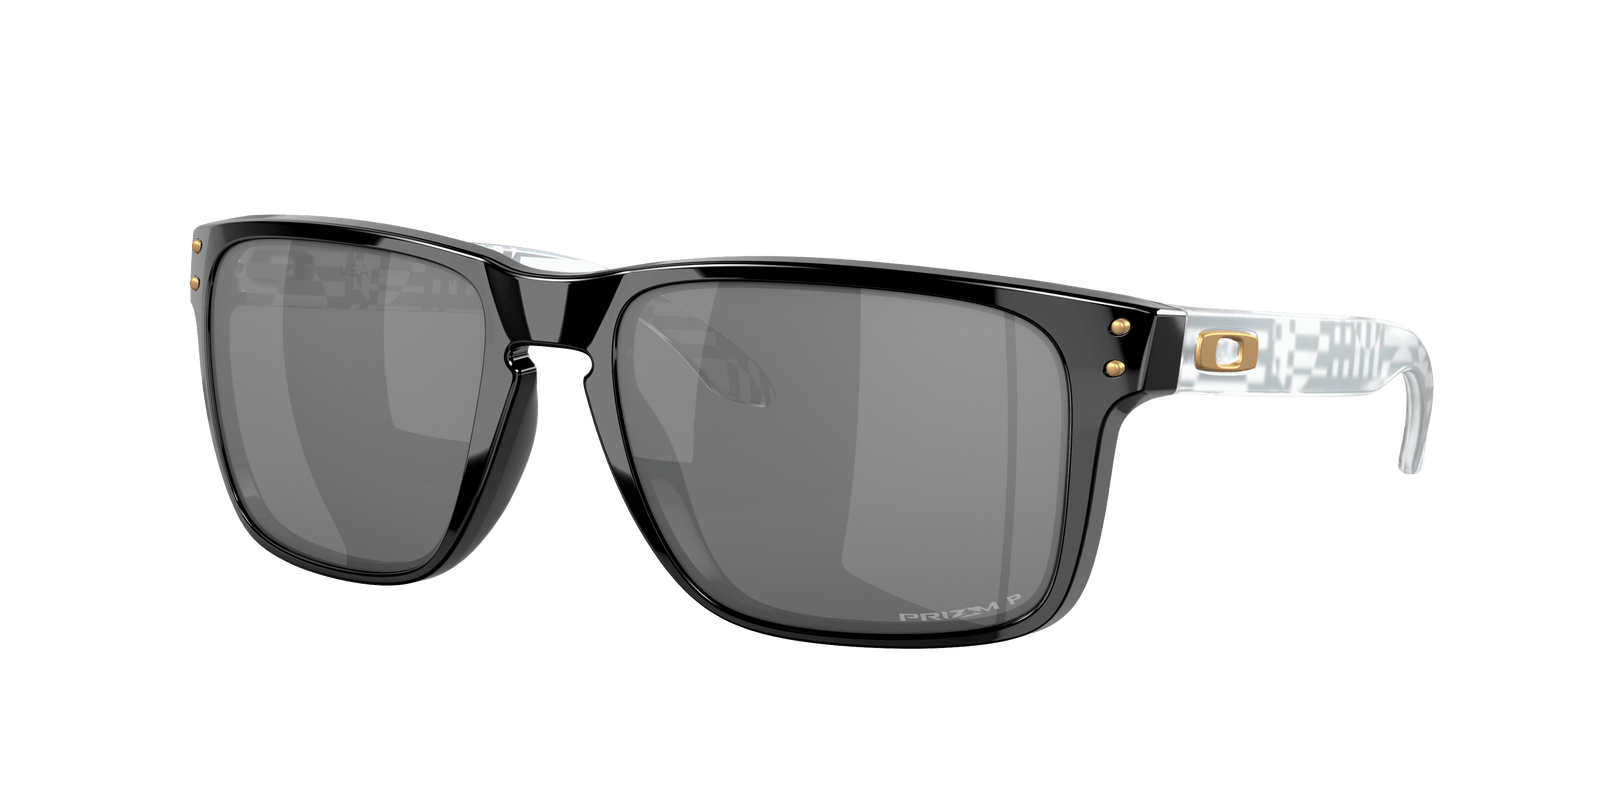 Buy Oakley Sunglasses & Goggles online in Canada at Freeride Boardshop